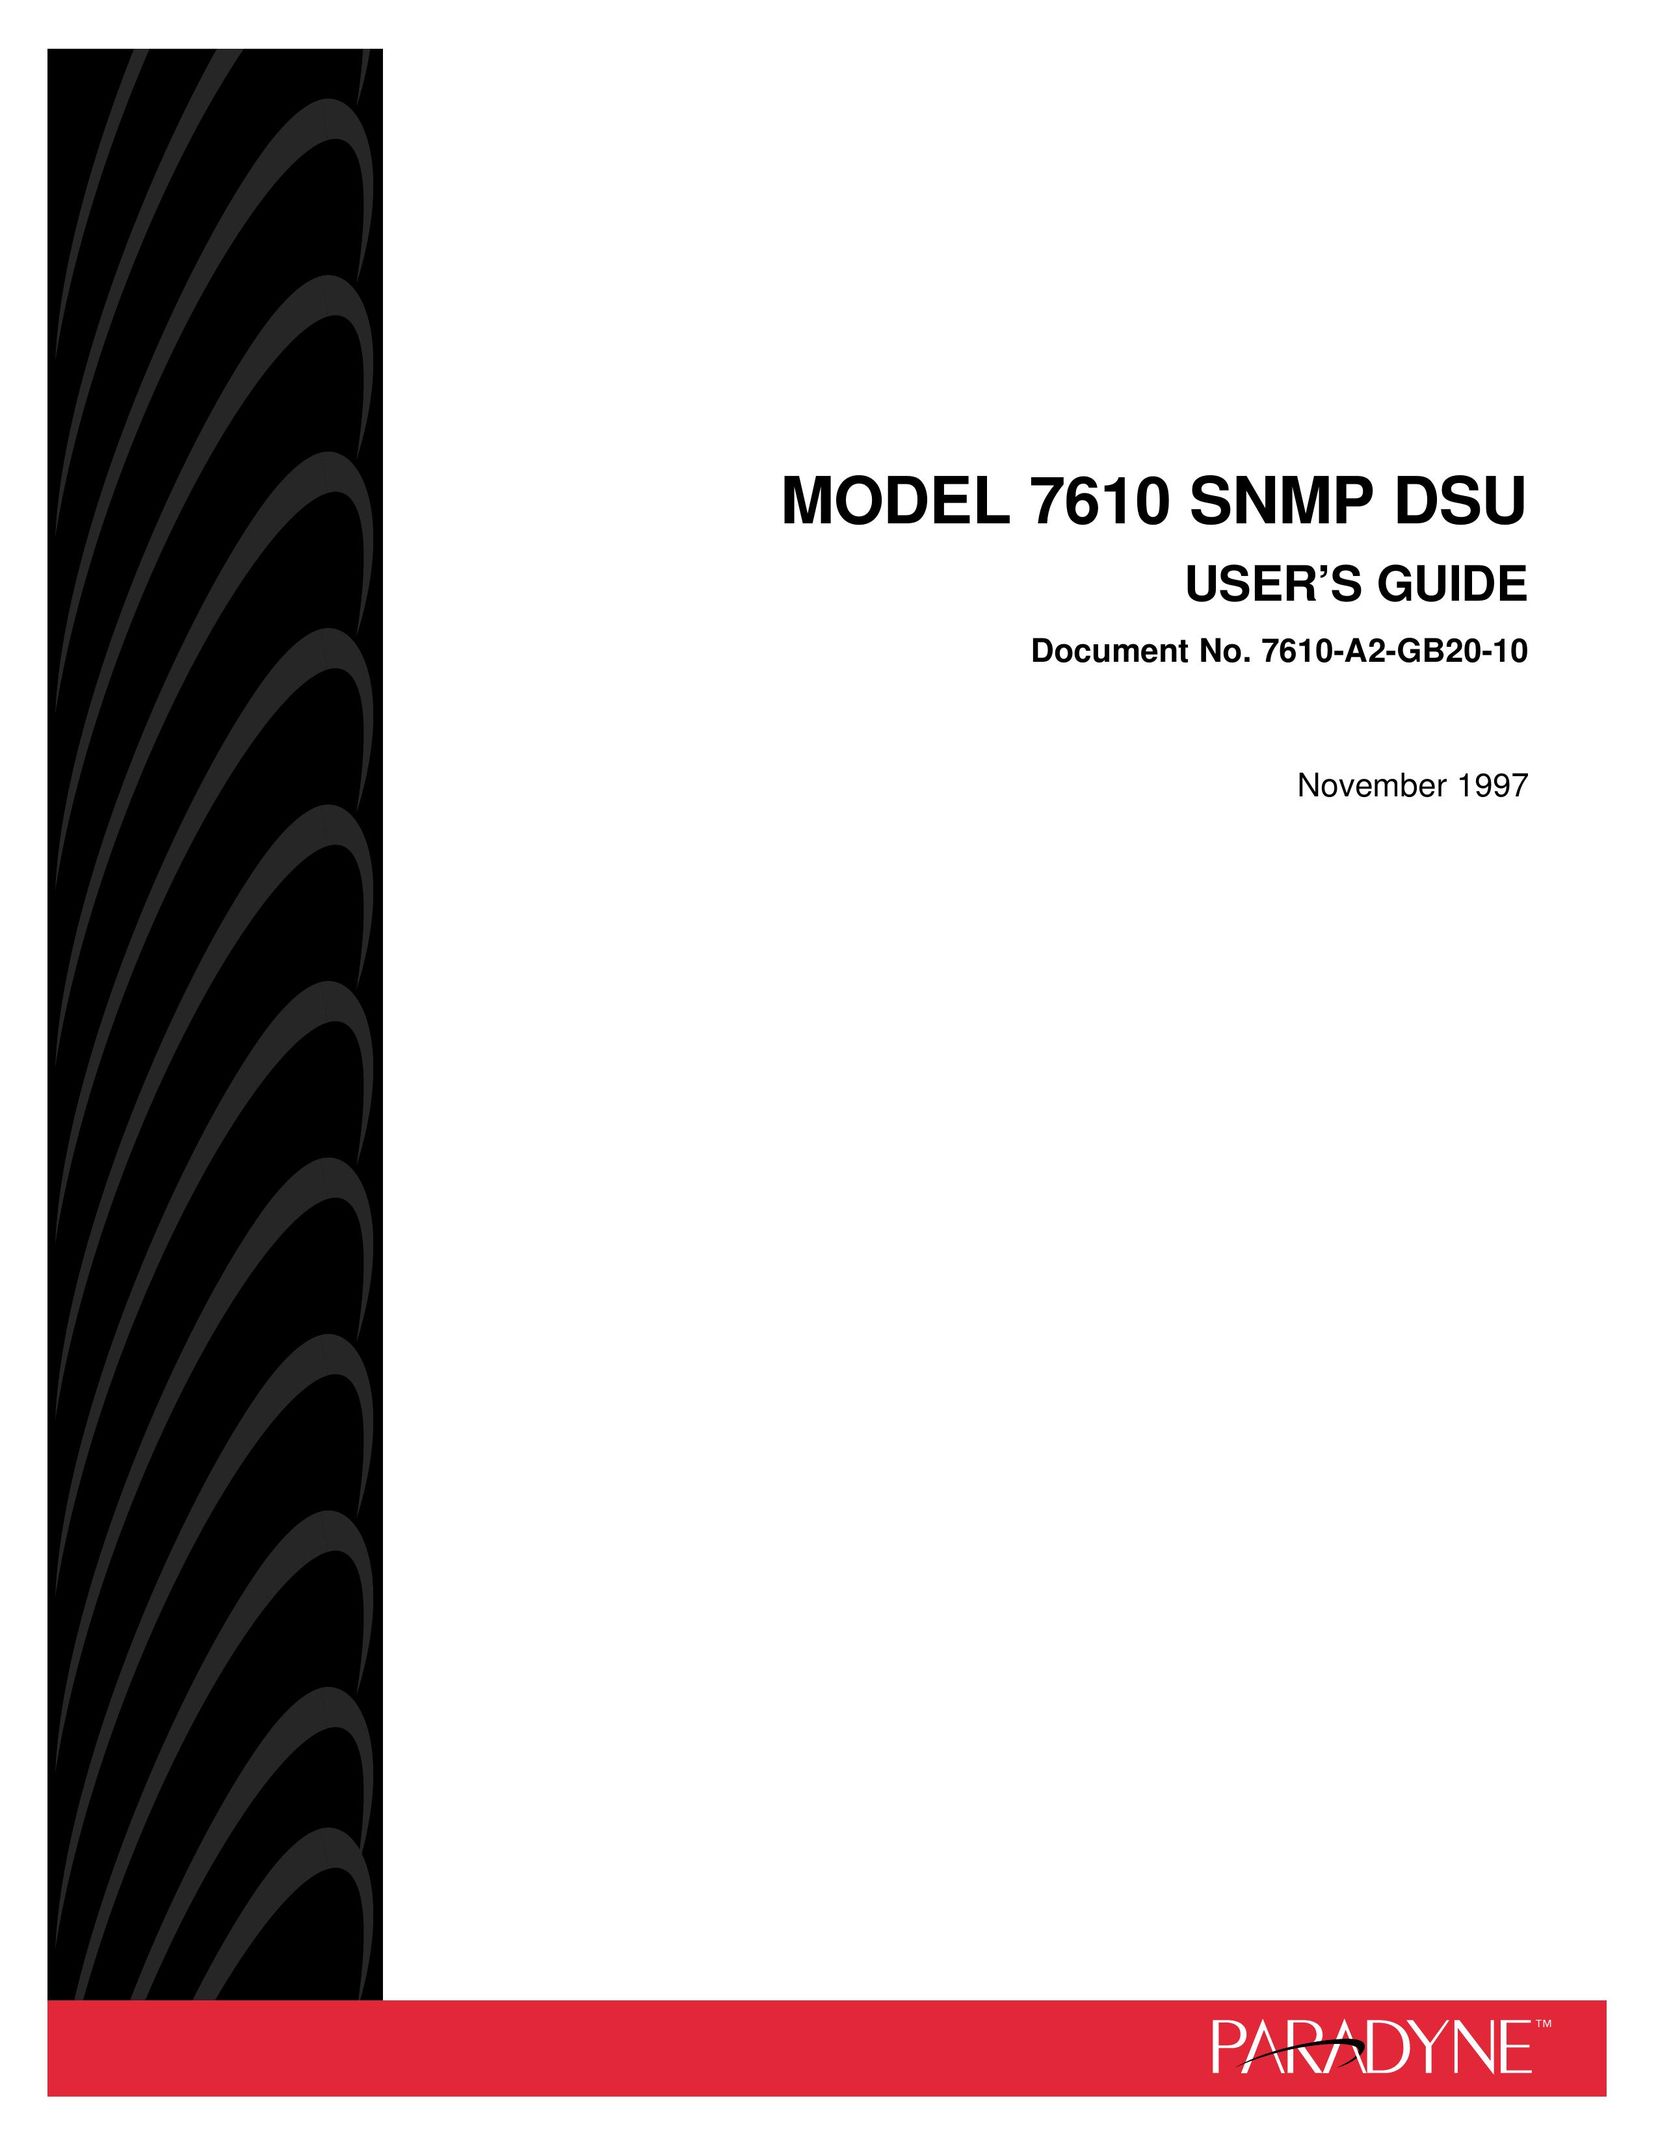 Paradyne SNMP DSU Computer Hardware User Manual